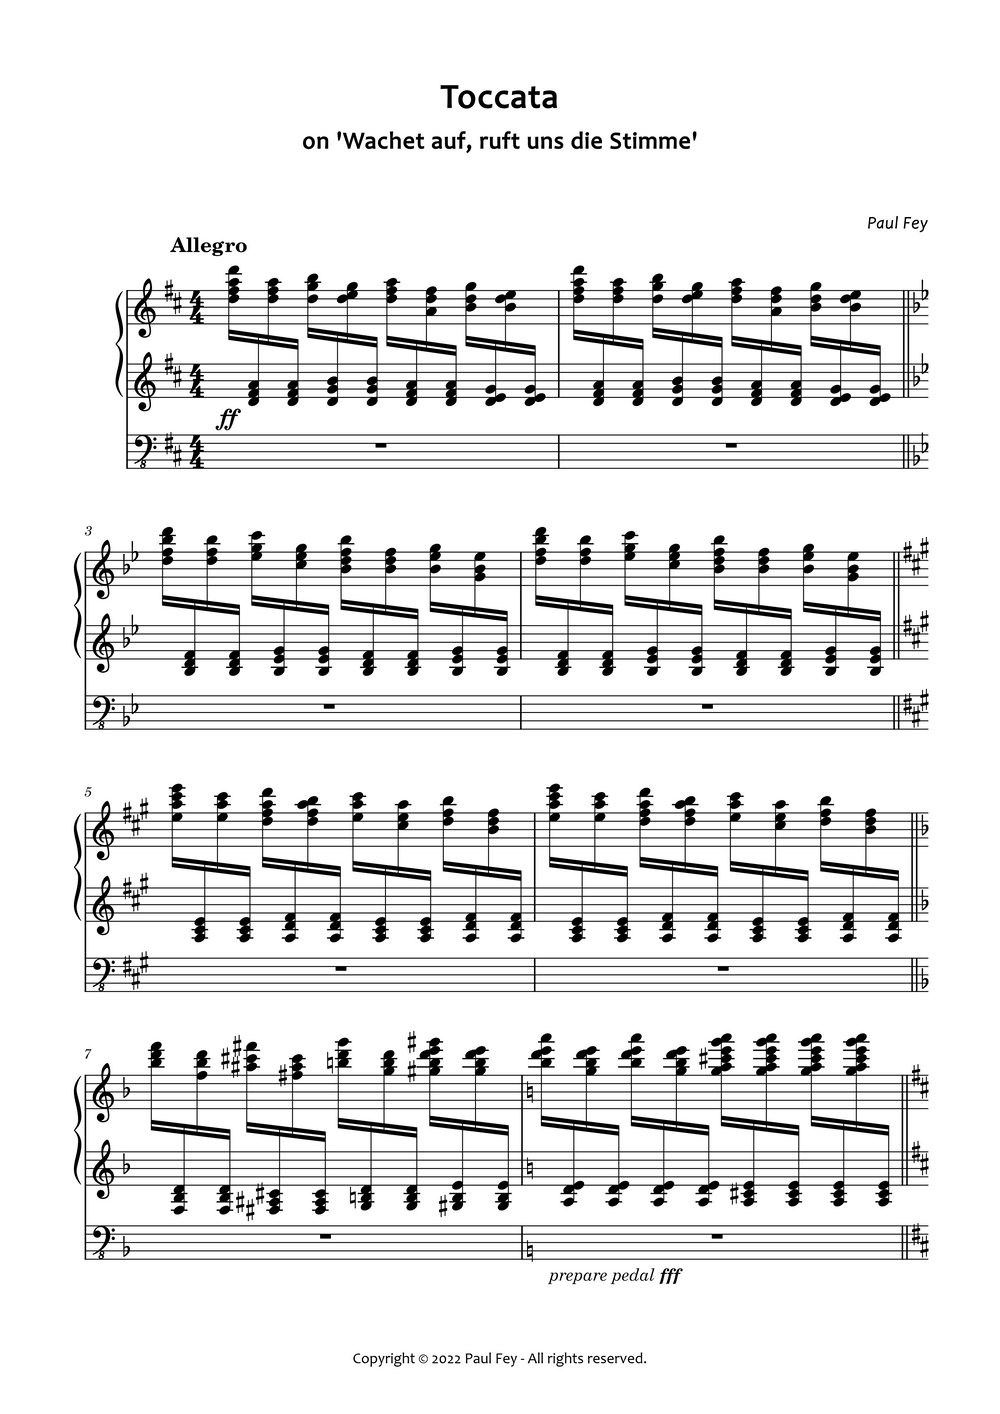 Toccata on "Wachet auf" / "Sleepers awake" (Sheet Music) - Music for Organ